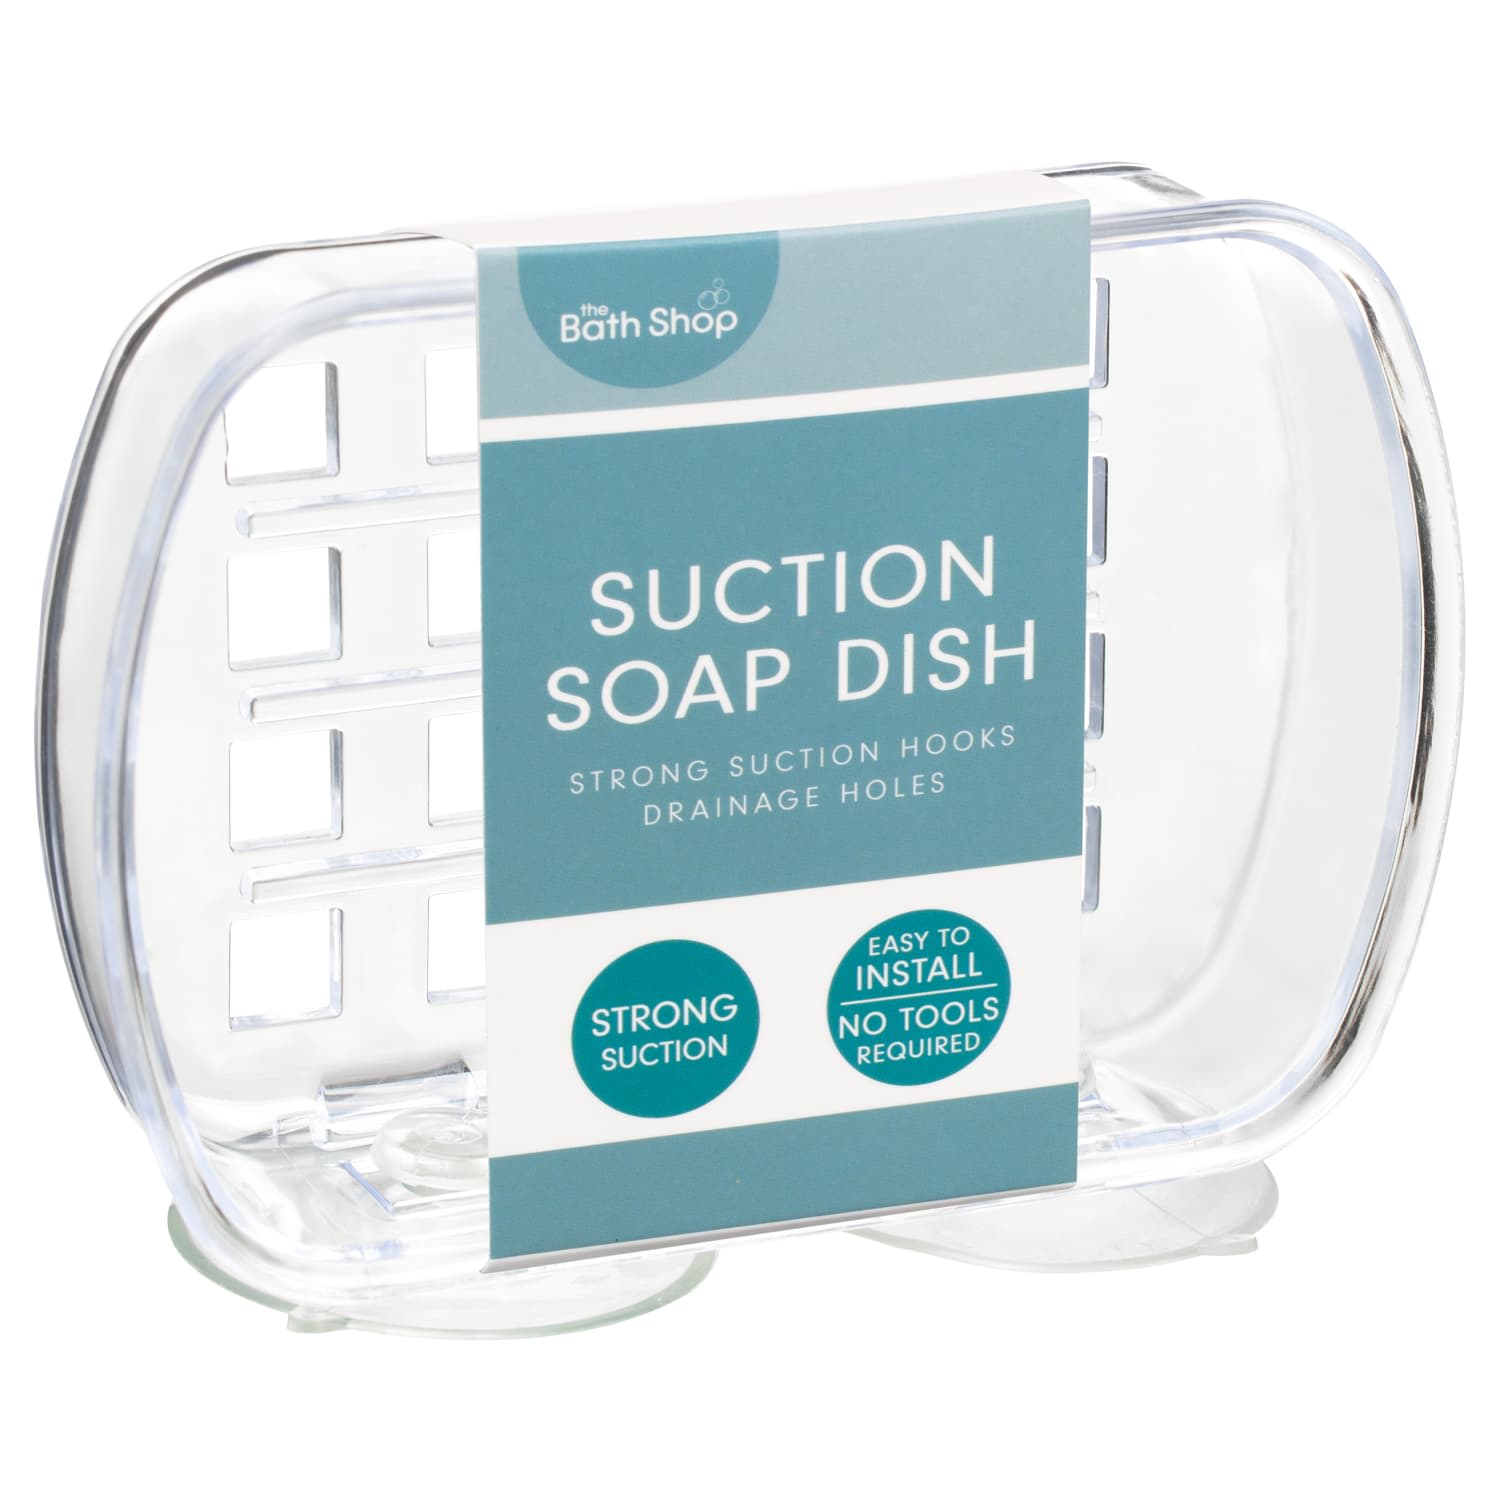 The Bath Shop Suction Soap Dish - Clear